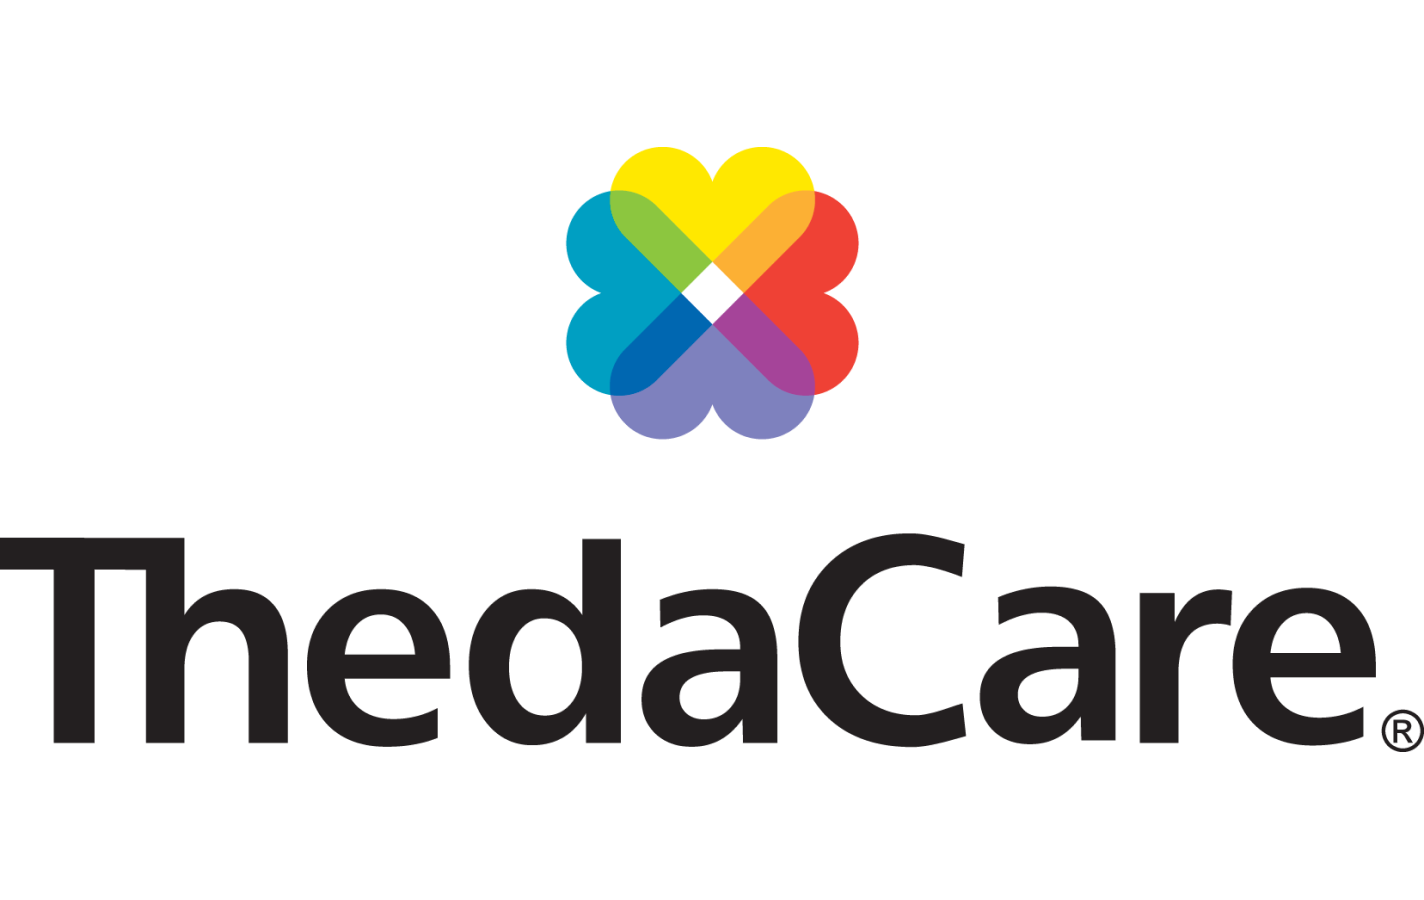 Thedacare logo